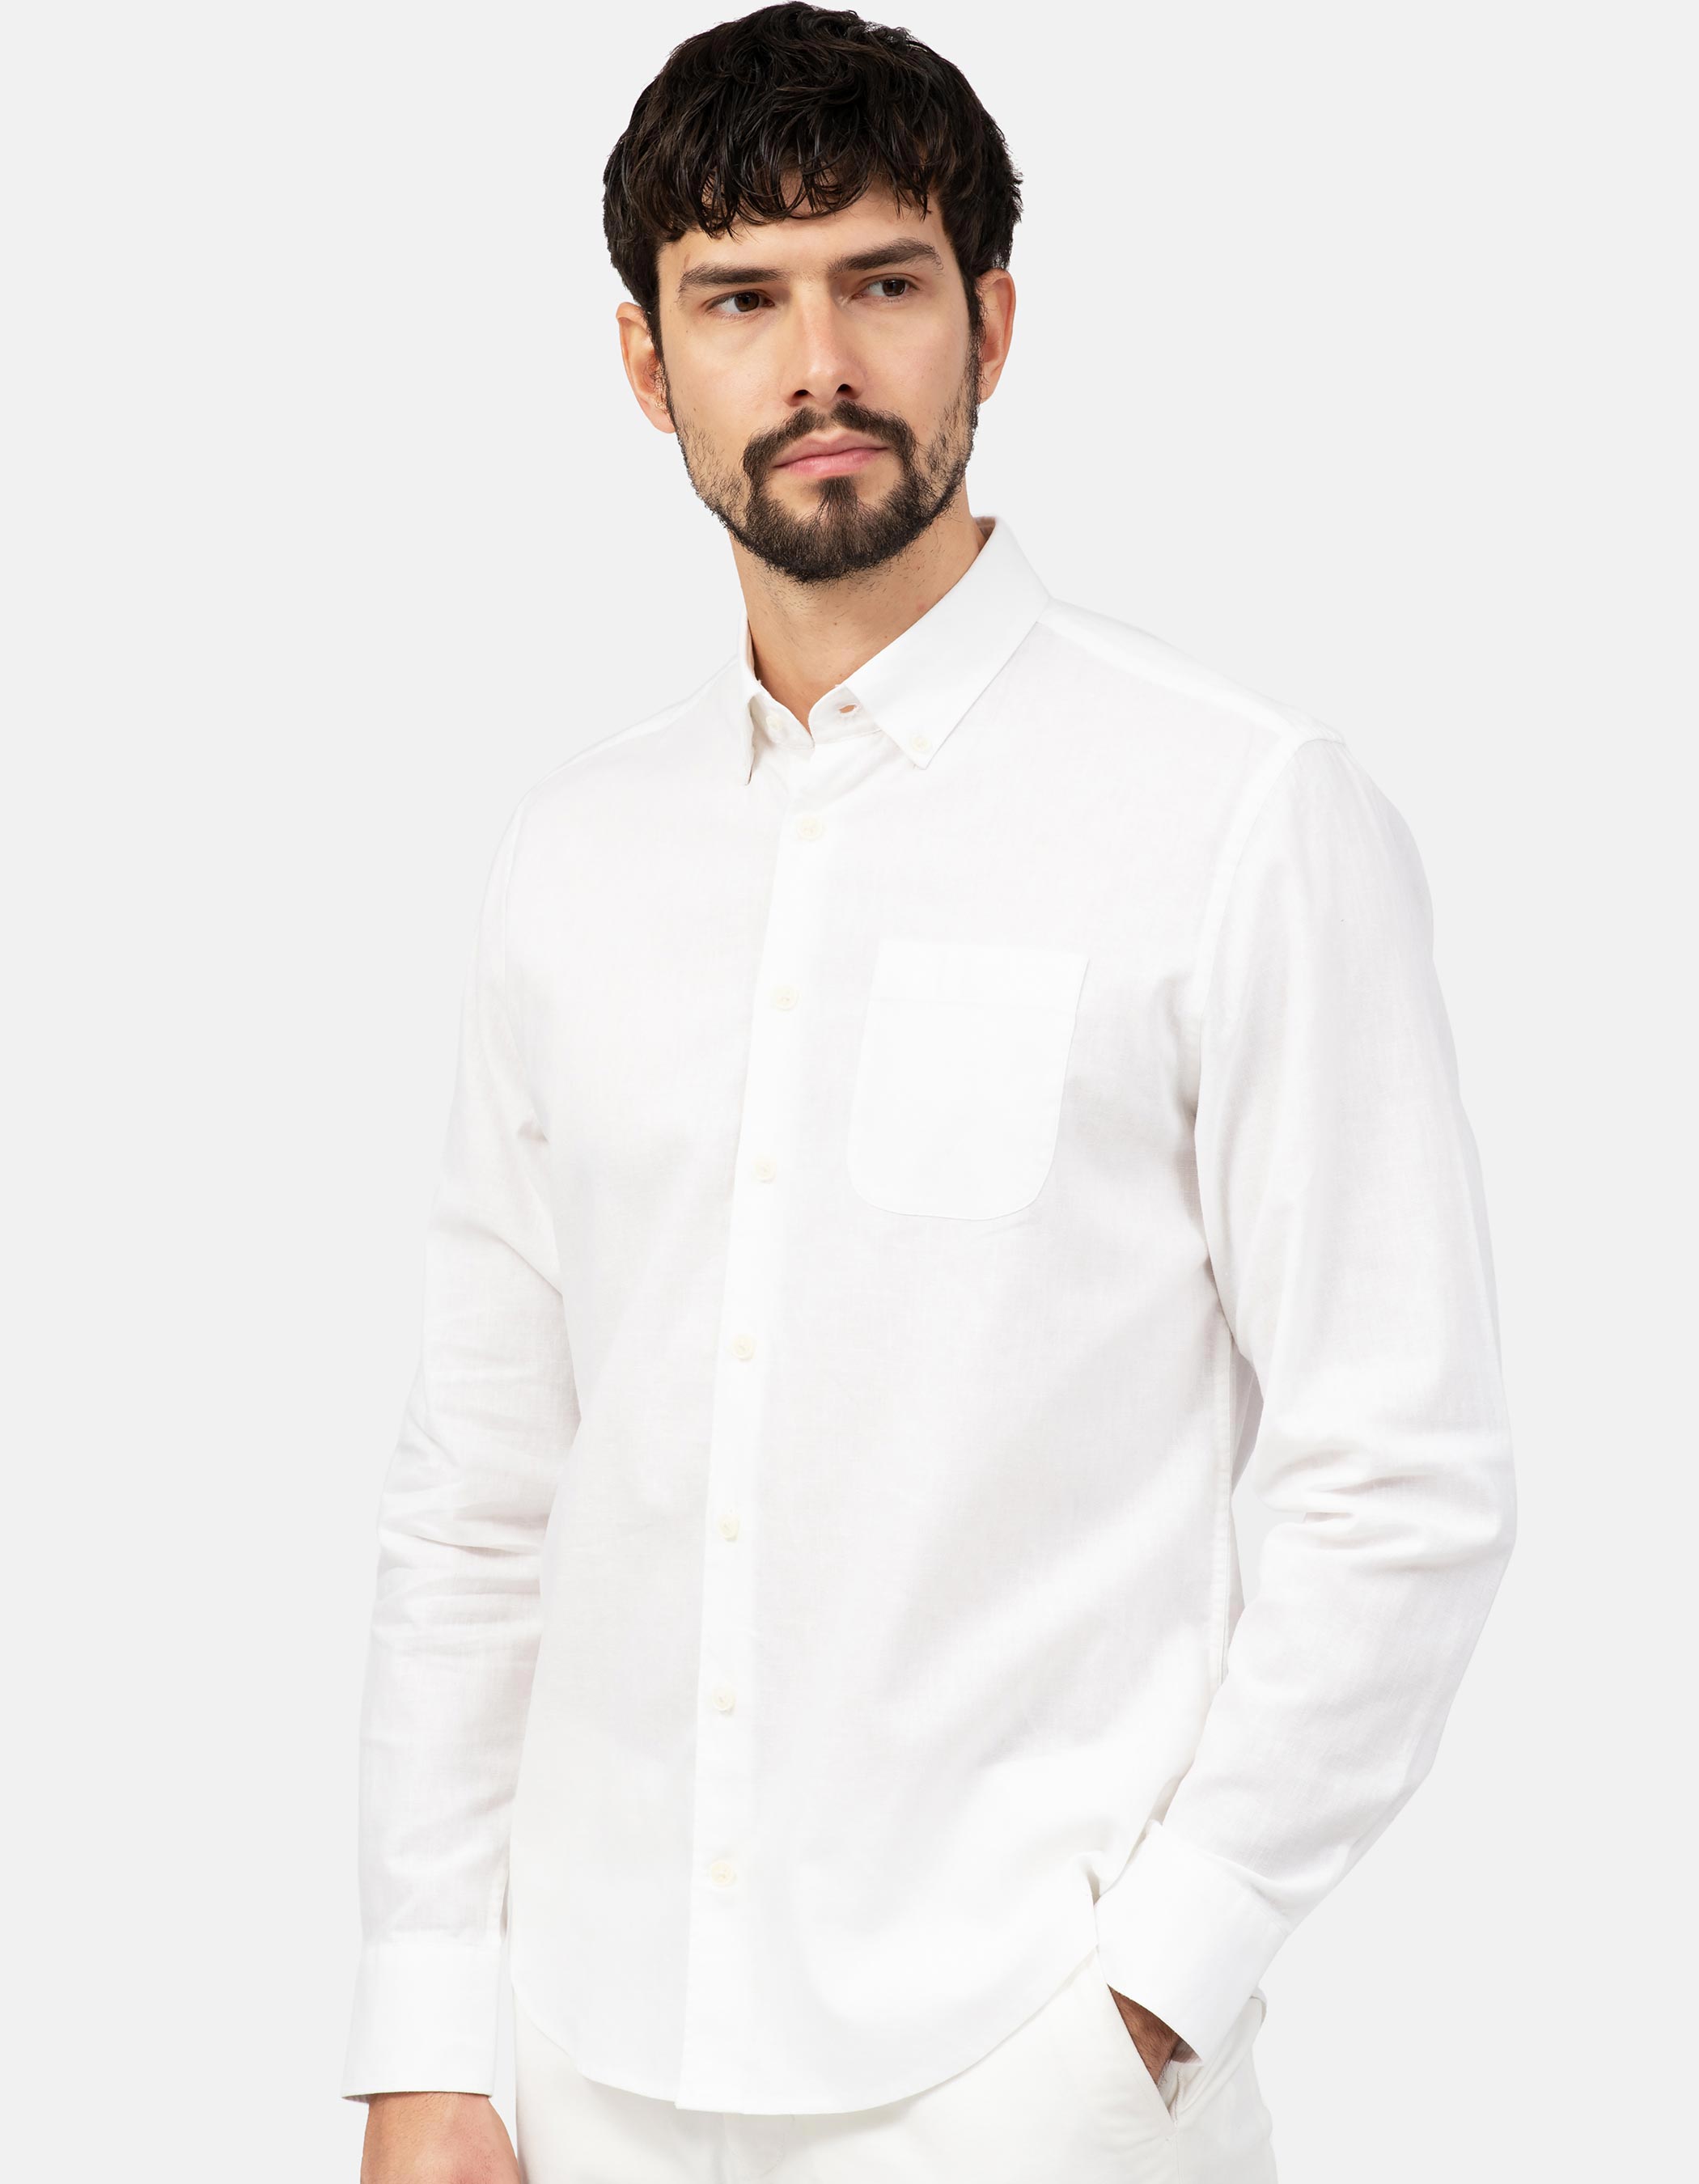 Linen and cotton shirt. 4